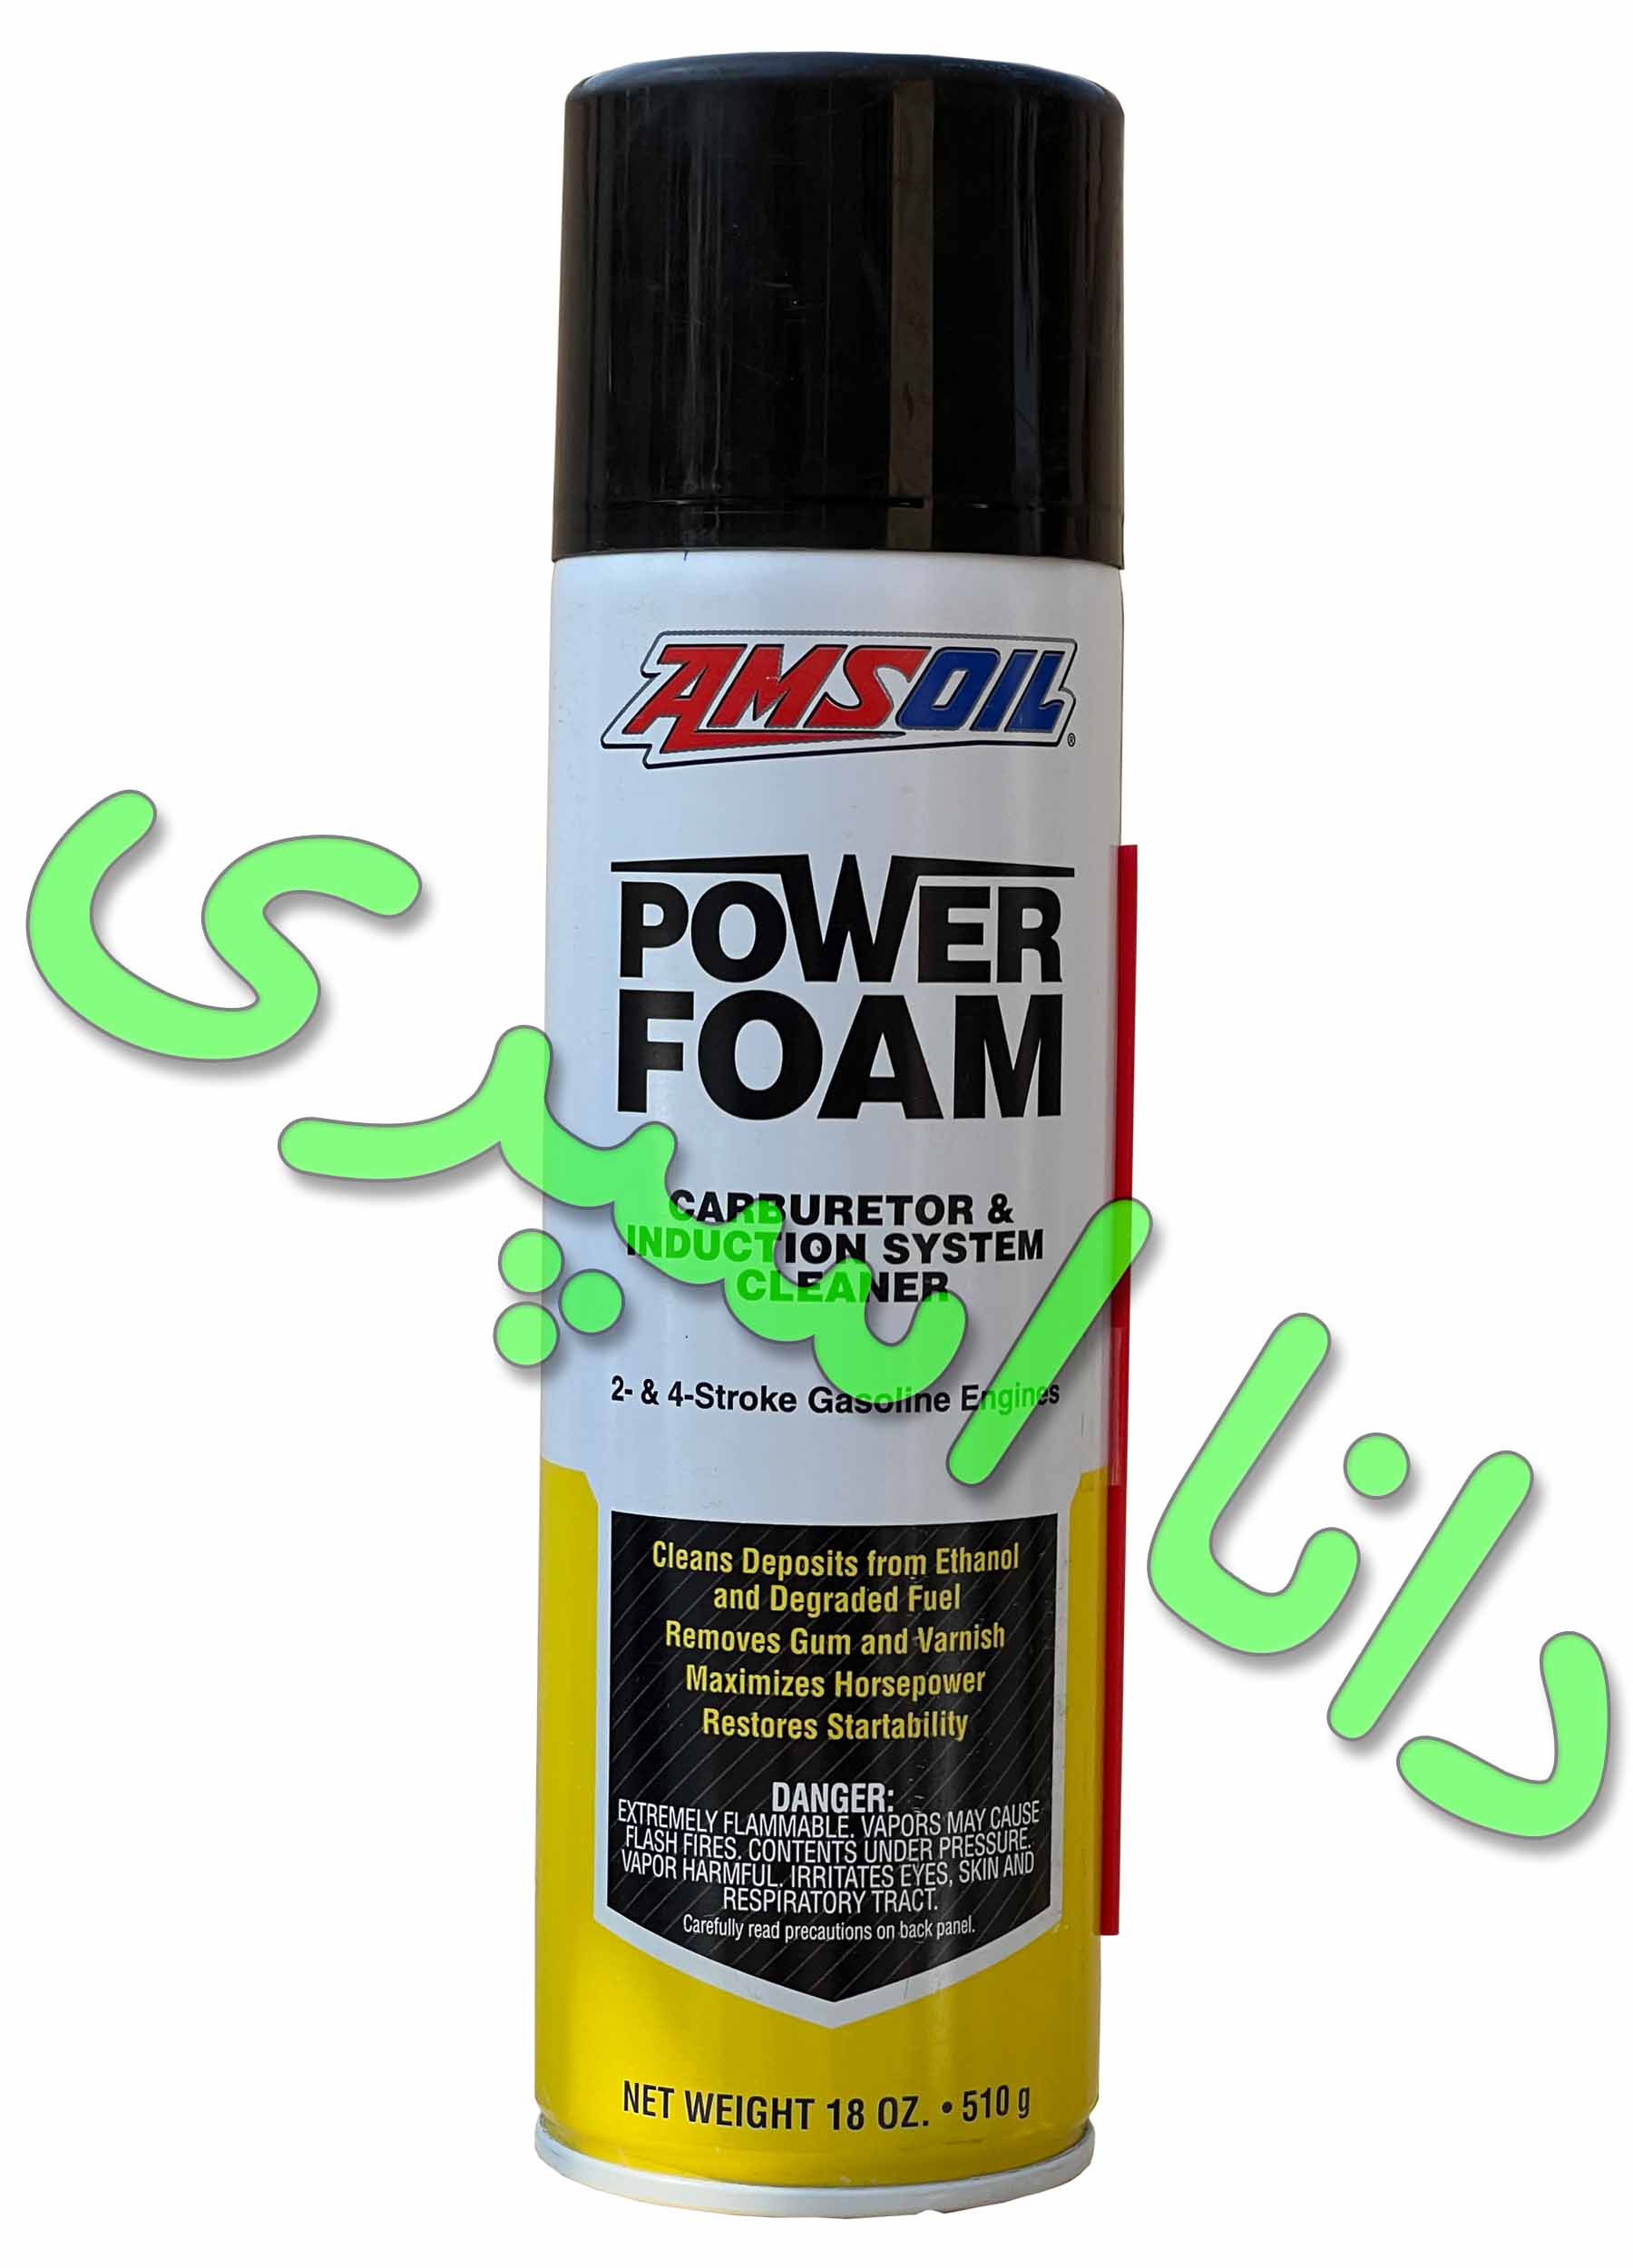 اسپری فوم امزویل (امس اویل) مدل Power Foam تمیز کننده ی دریچه گاز,منیفولد هوا,سوپاپ هواAMSOIL Power Foam®